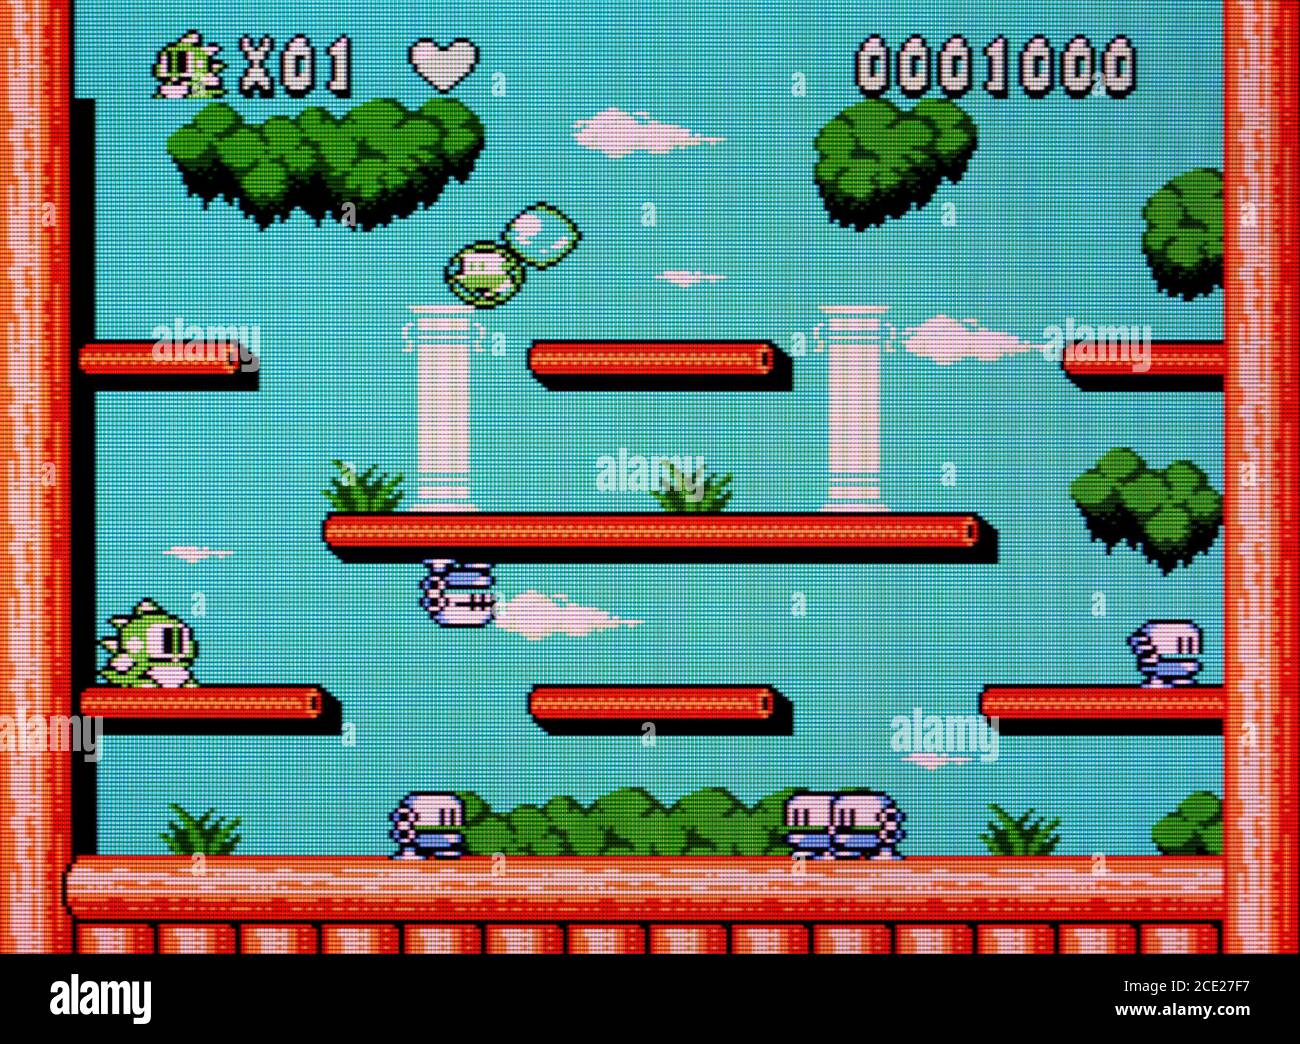 Bobble 2 - Nintendo Entertainment NES Videogame - use only Stock Photo - Alamy